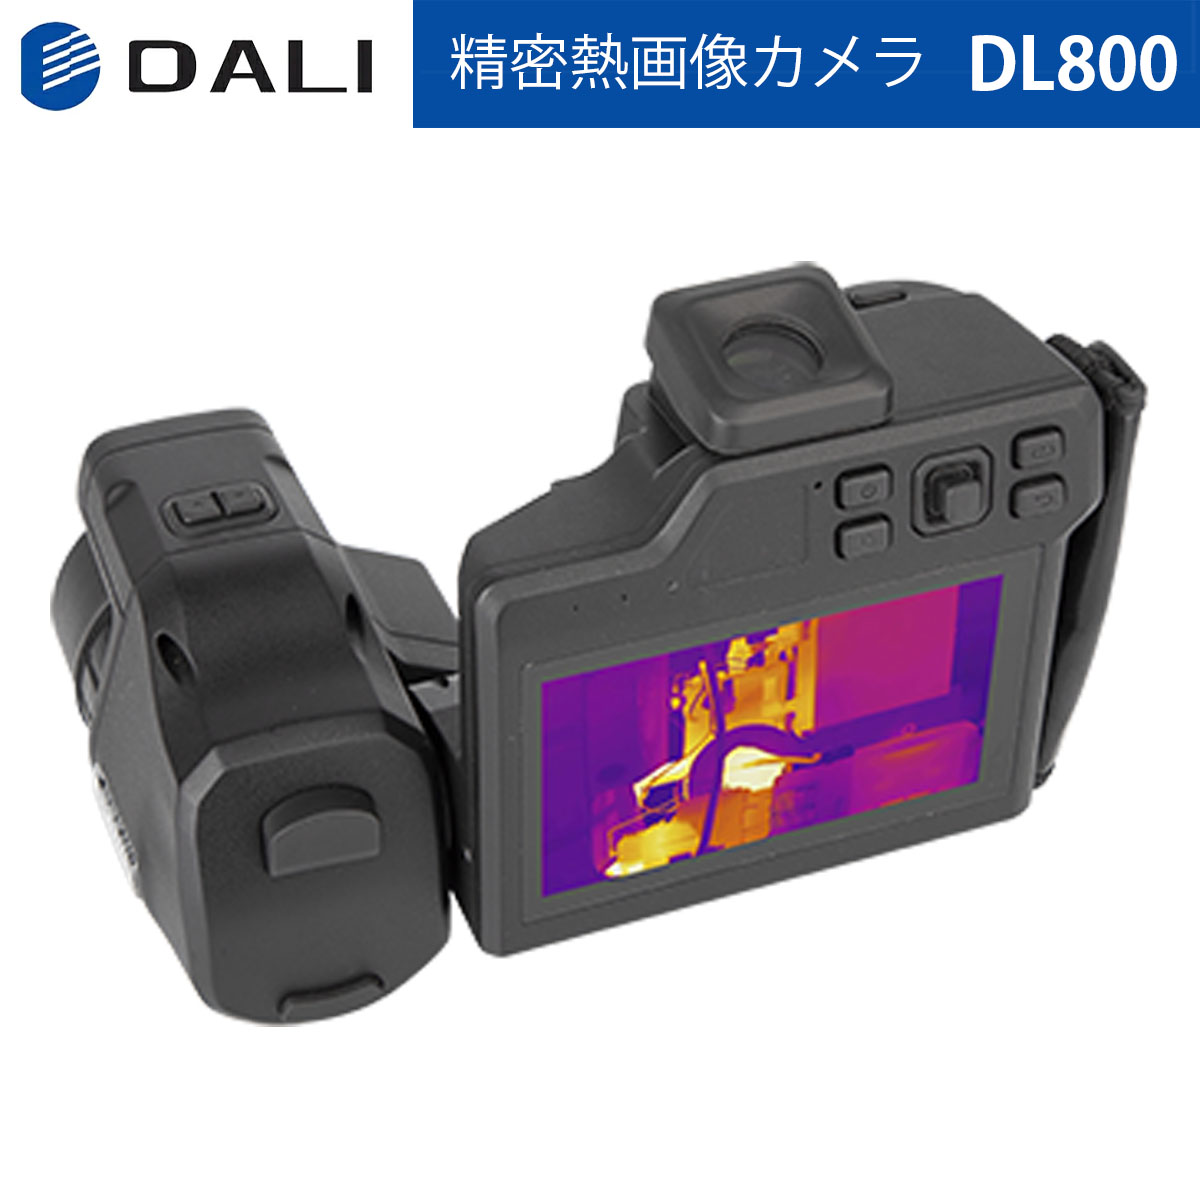 DALI【メーカー正規品】精密熱画像カメラ DL800 ポータブル 赤外線 サーマルイメージャー コンパス GPS Bluetooth WiFi タッチLCDスクリーン レンズ180度回転 急速充電 HDMIビデオ出力